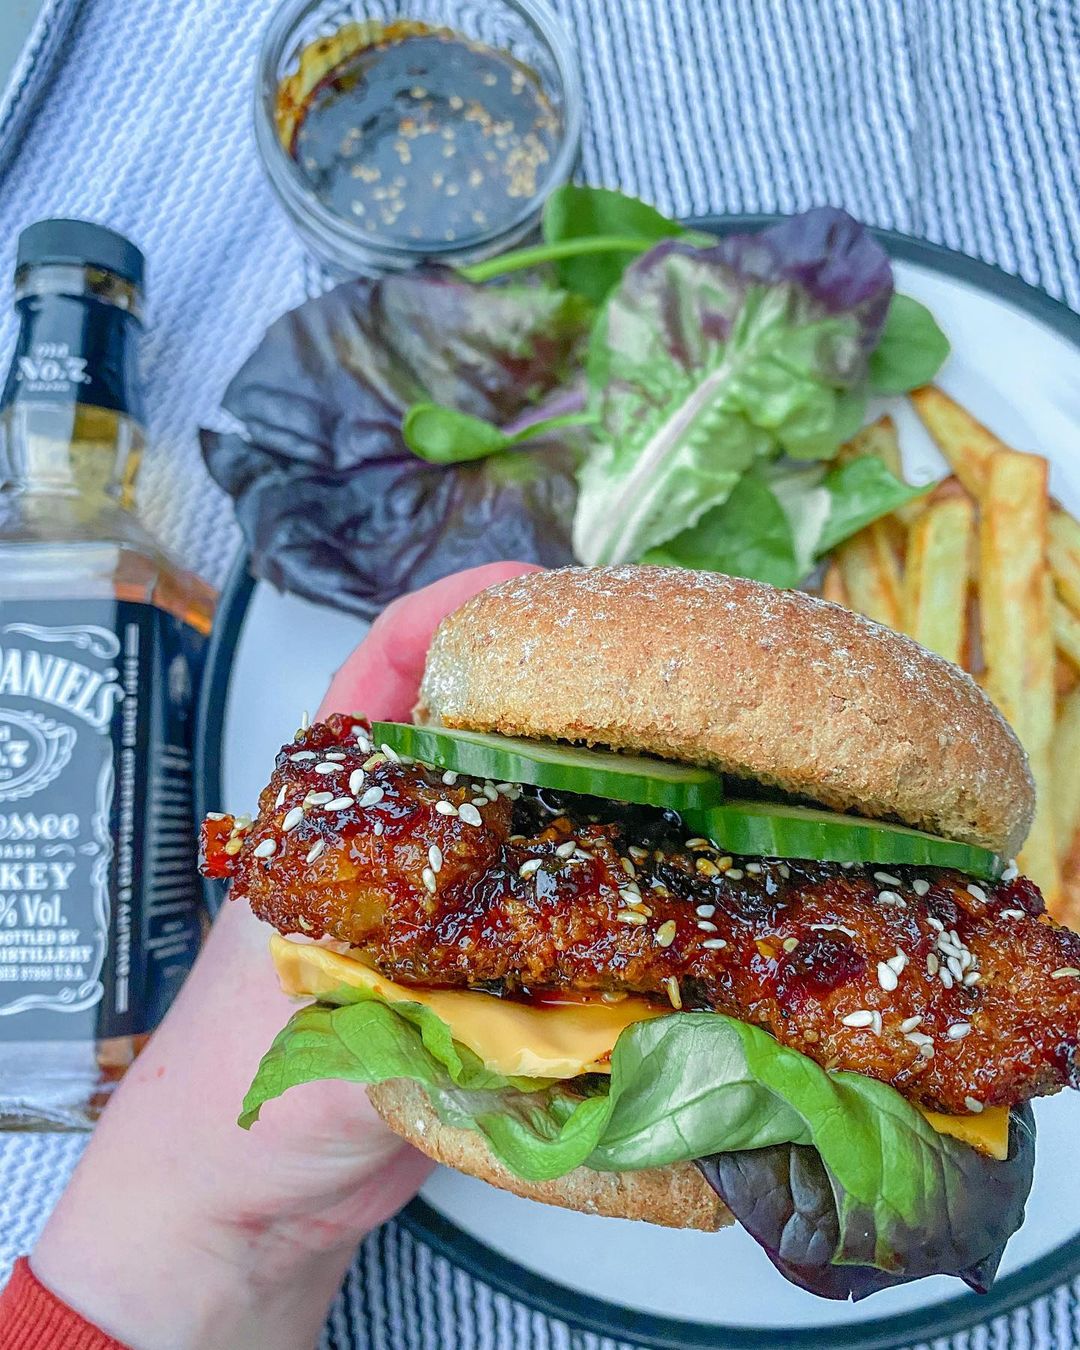 Jack Daniel’s Sesame Chicken Burger